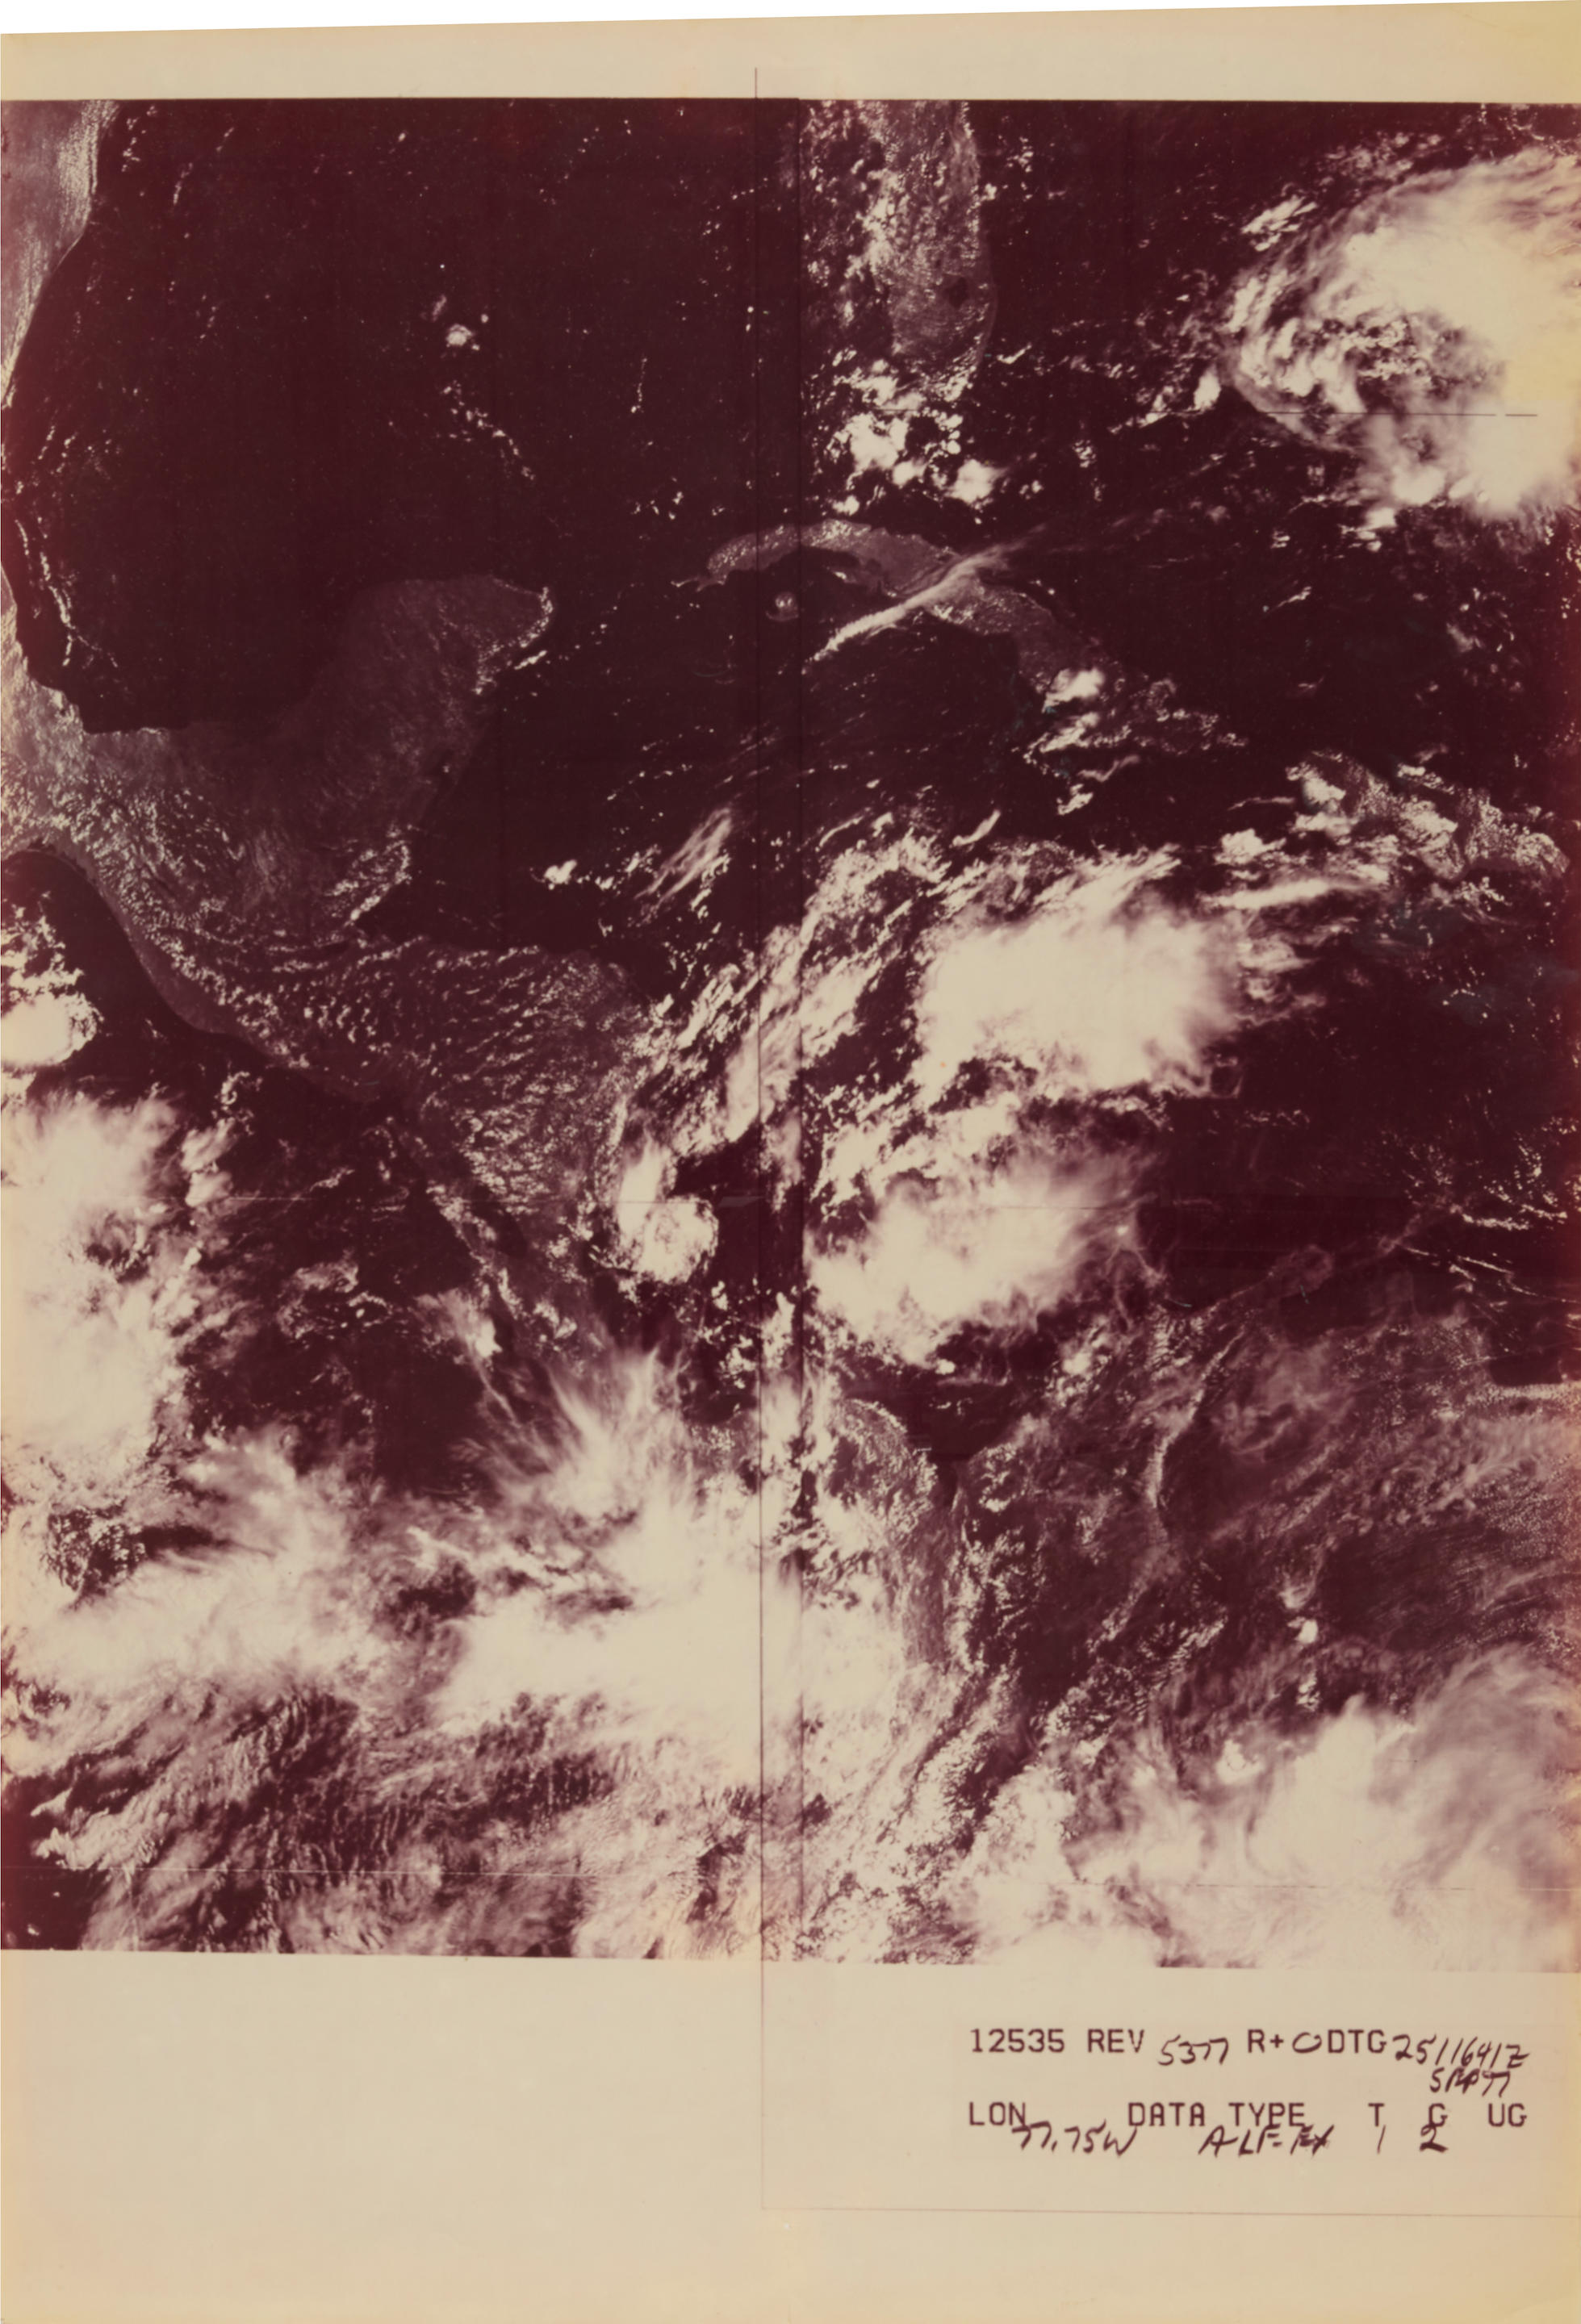 A group of panoramic satellite image photos